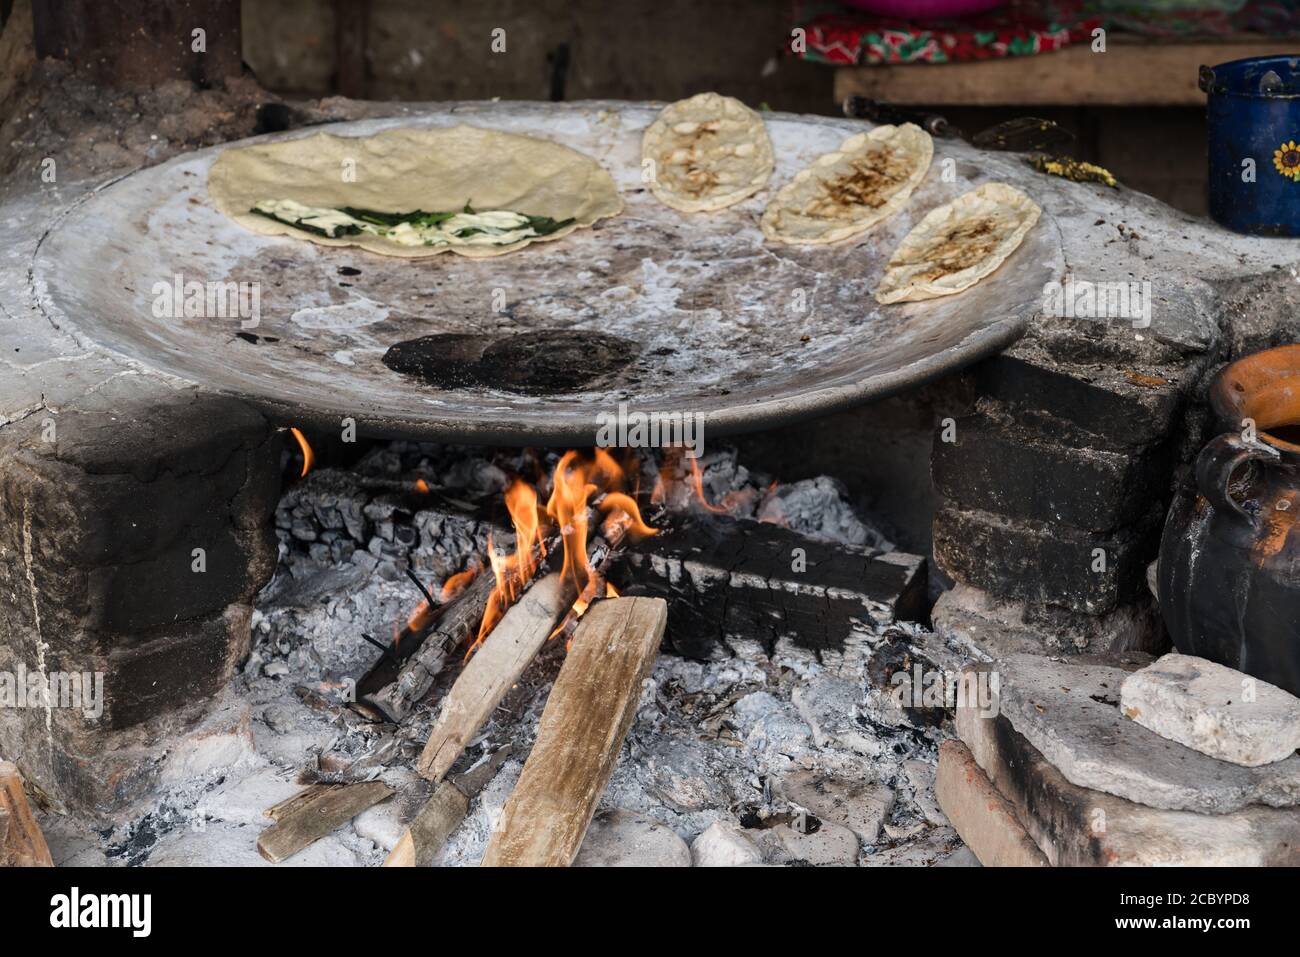 Comal para cocinar fotografías e imágenes de alta resolución - Alamy